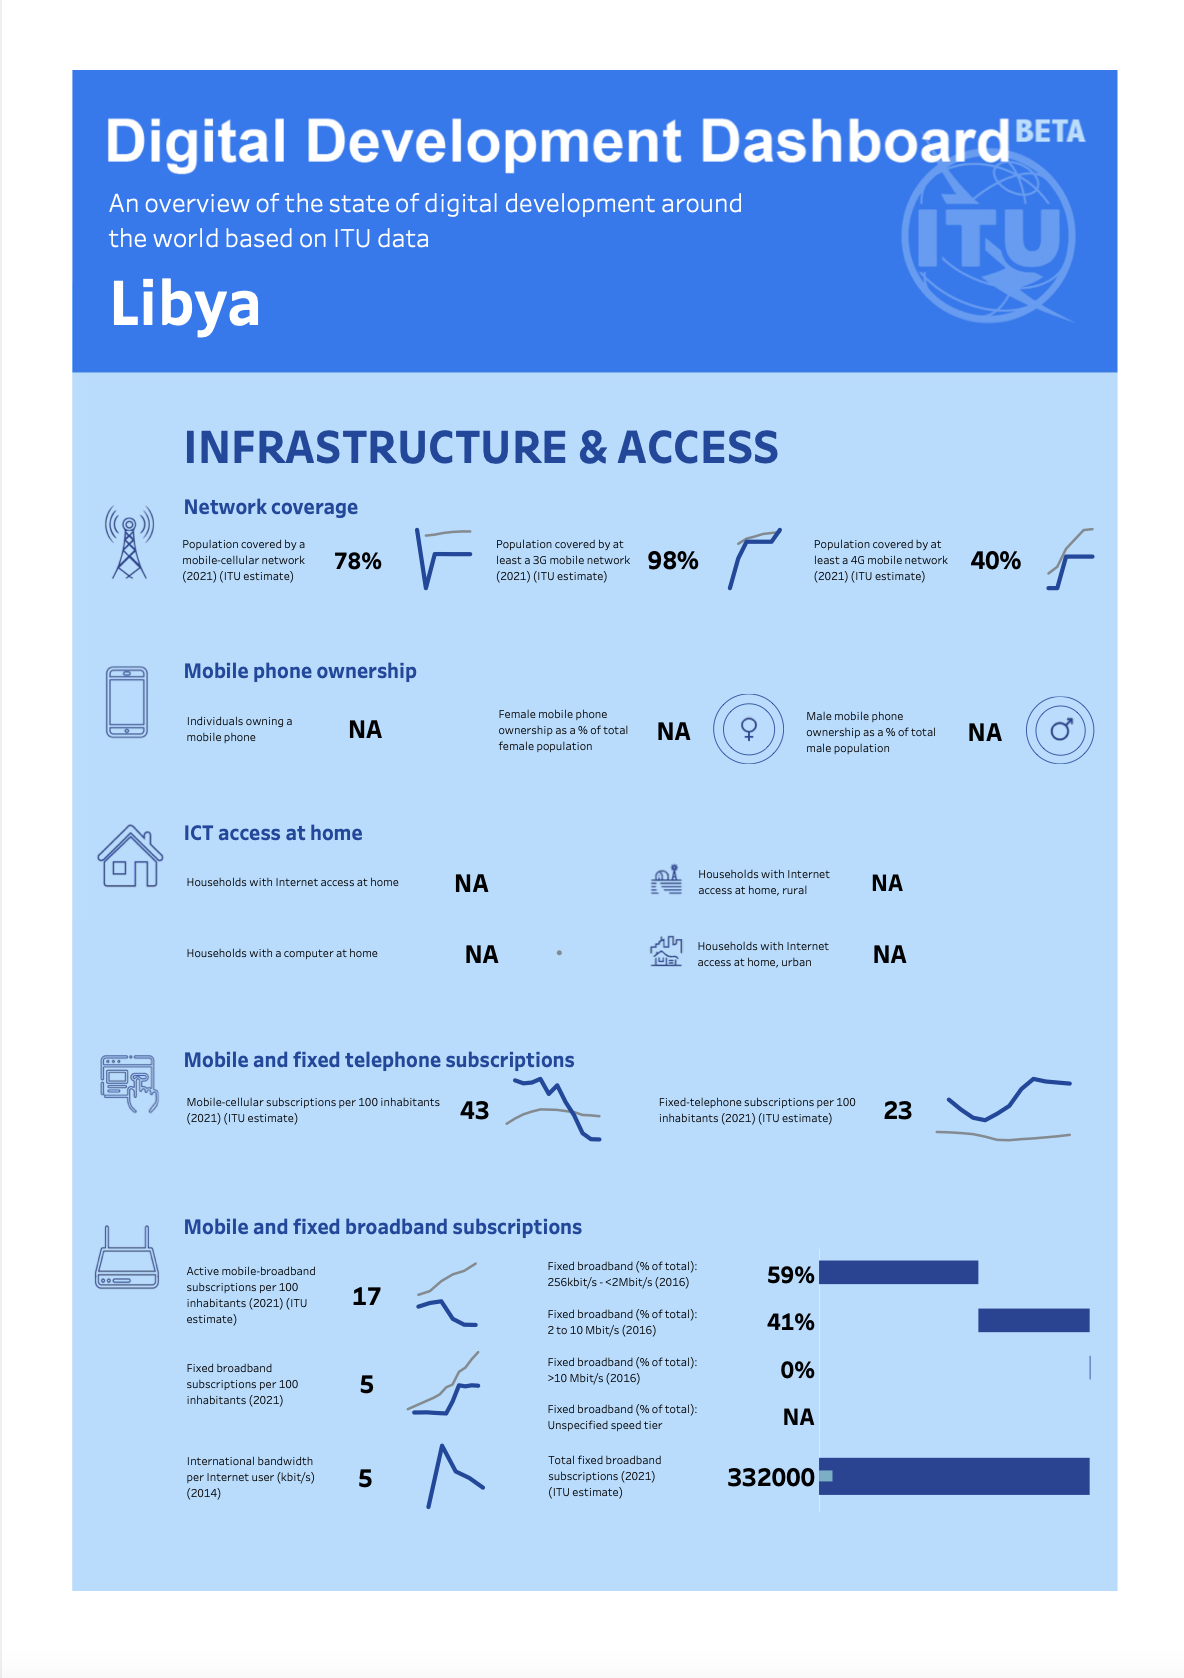 Libya Digital Development Dashboard